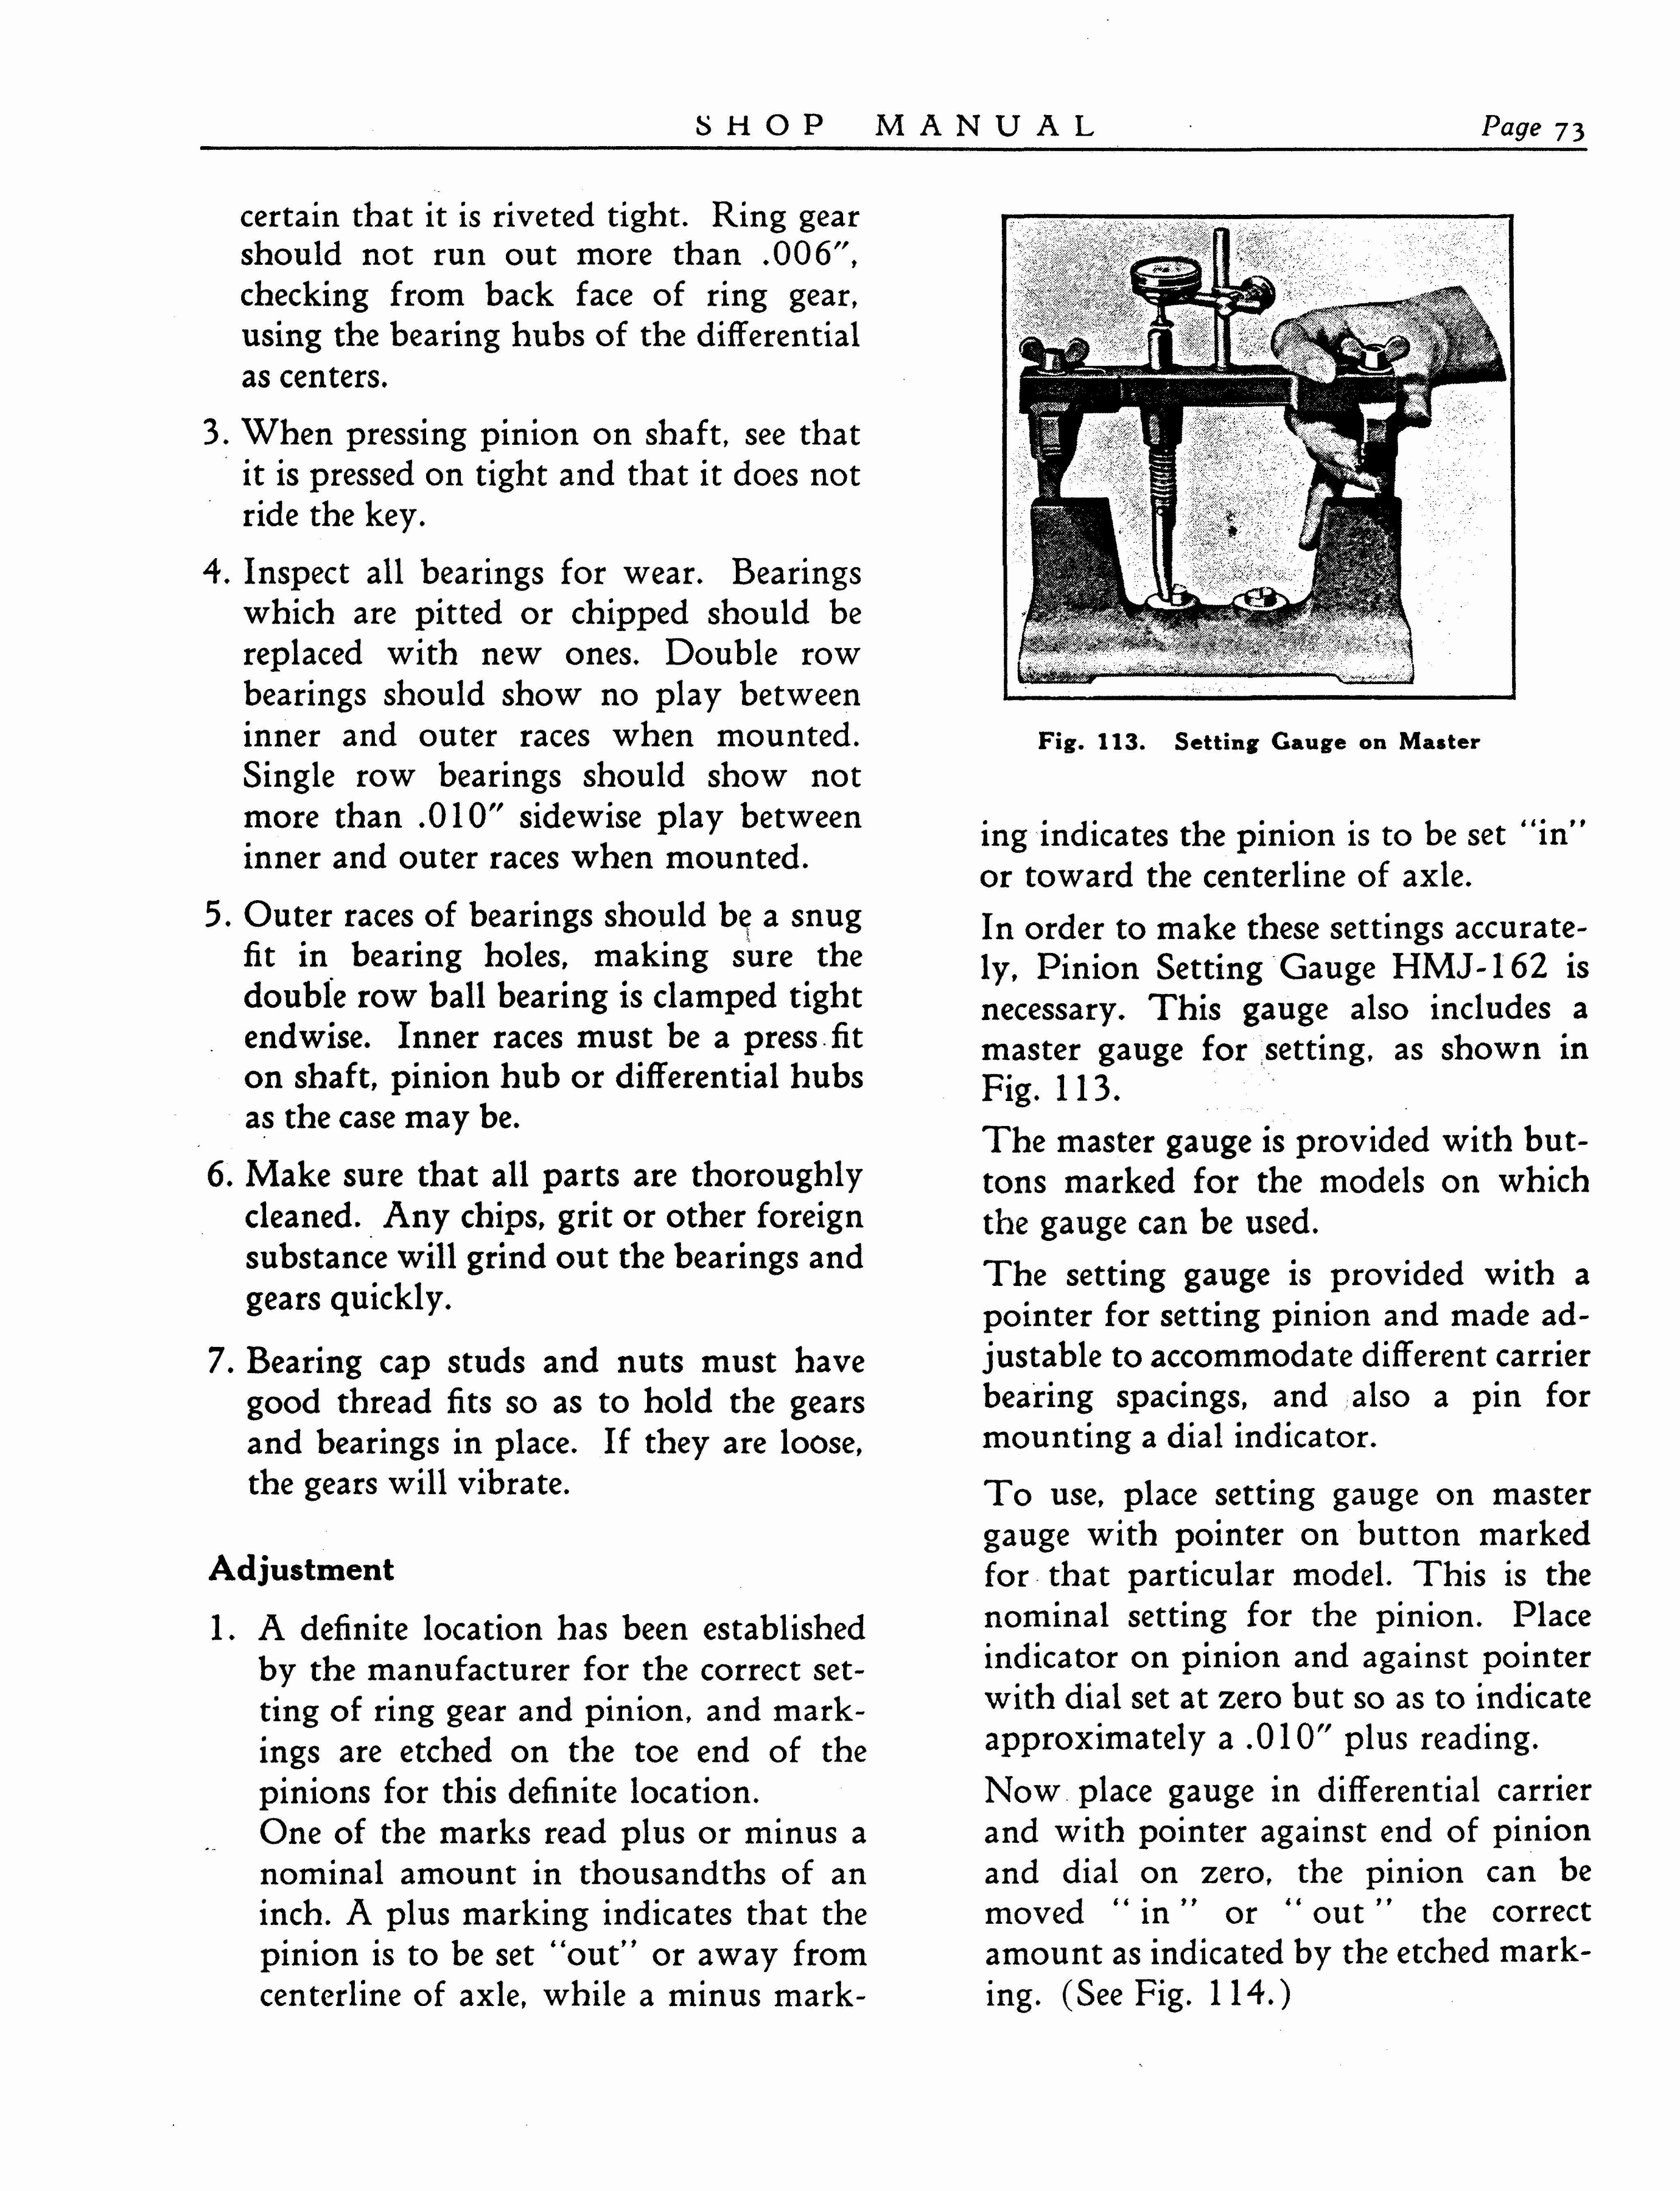 n_1933 Buick Shop Manual_Page_074.jpg